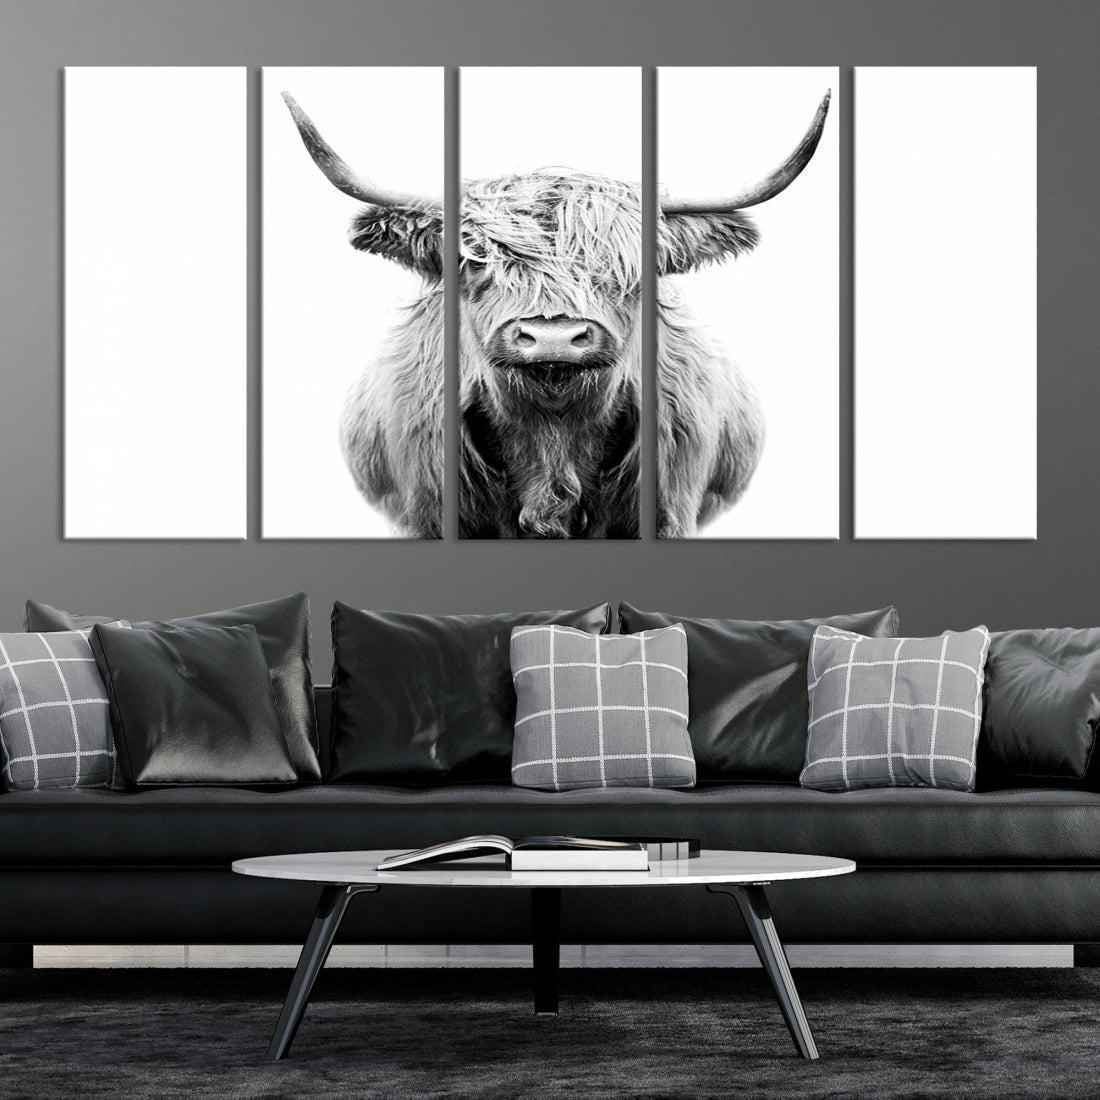 Large Scottish Highland Cow for Farmhouse Decor Wall Art Canvas Print